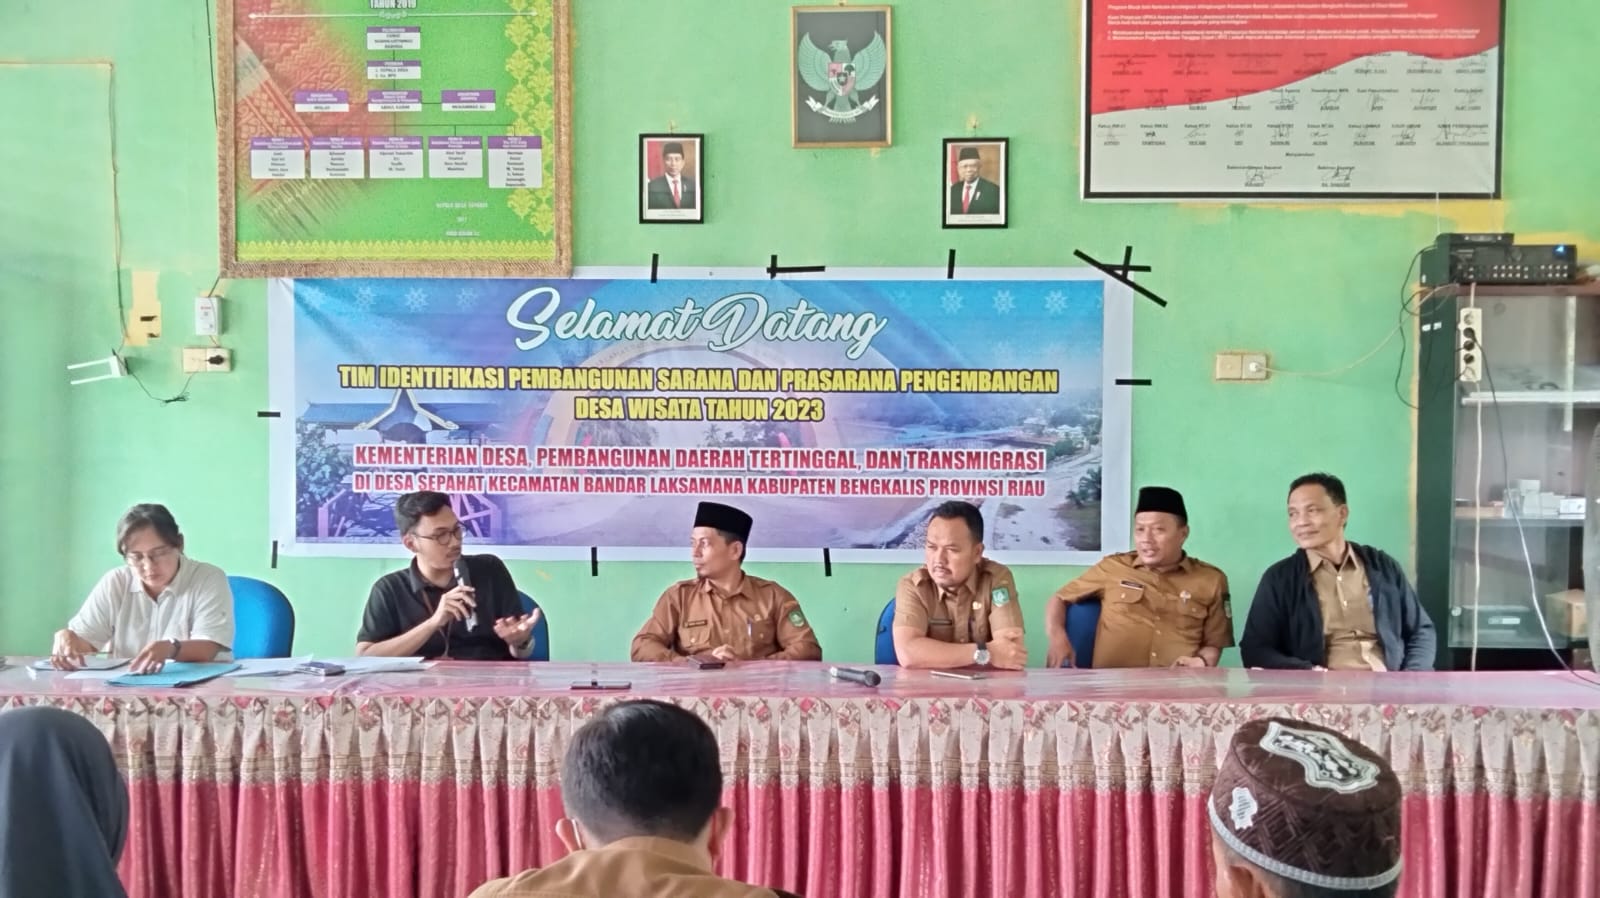 Tim Kemendes PDT RI Lakukan Identifikasi Pengembangan Sarana dan Prasarana Wisata di Desa Sepahat, Kecamatan Bandar Laksamana